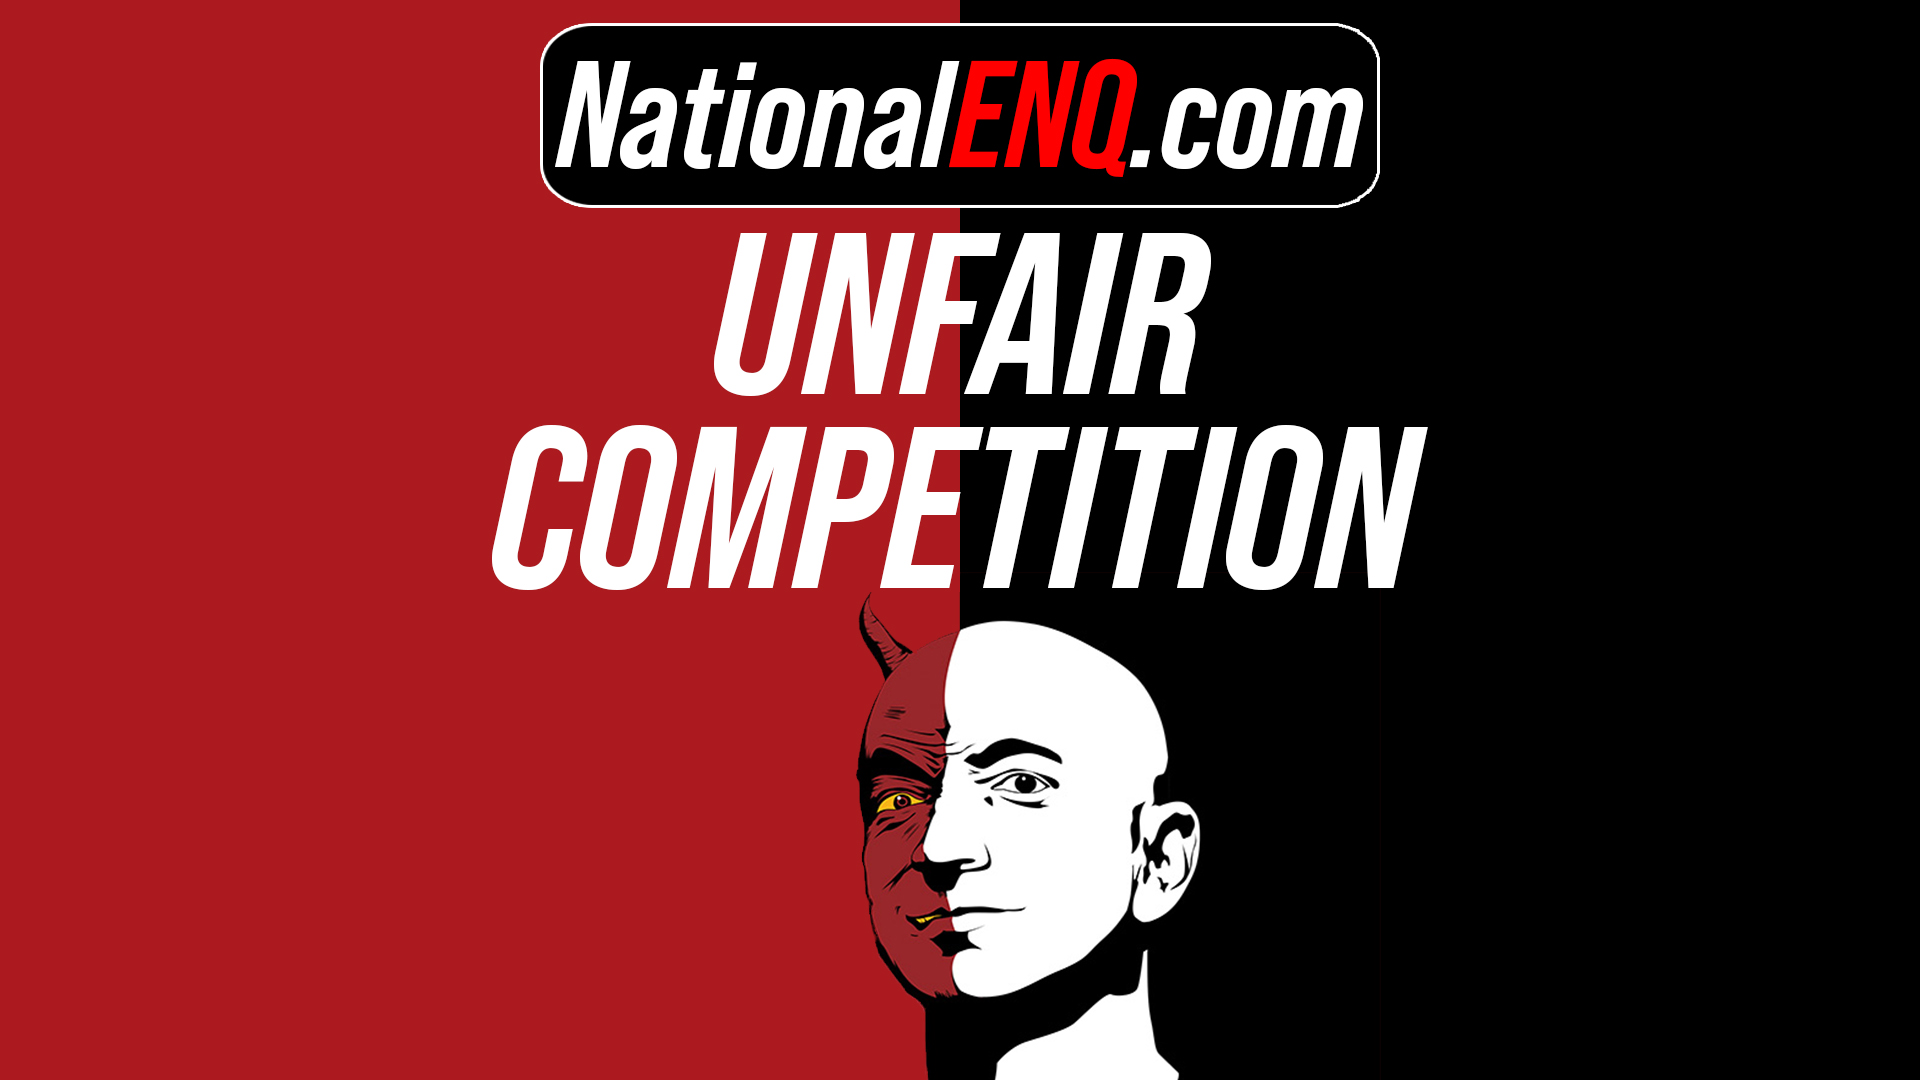 National ENQ News: Unfair Competition, Amazon Versus American Export Import – U.S. Congress Inquiry